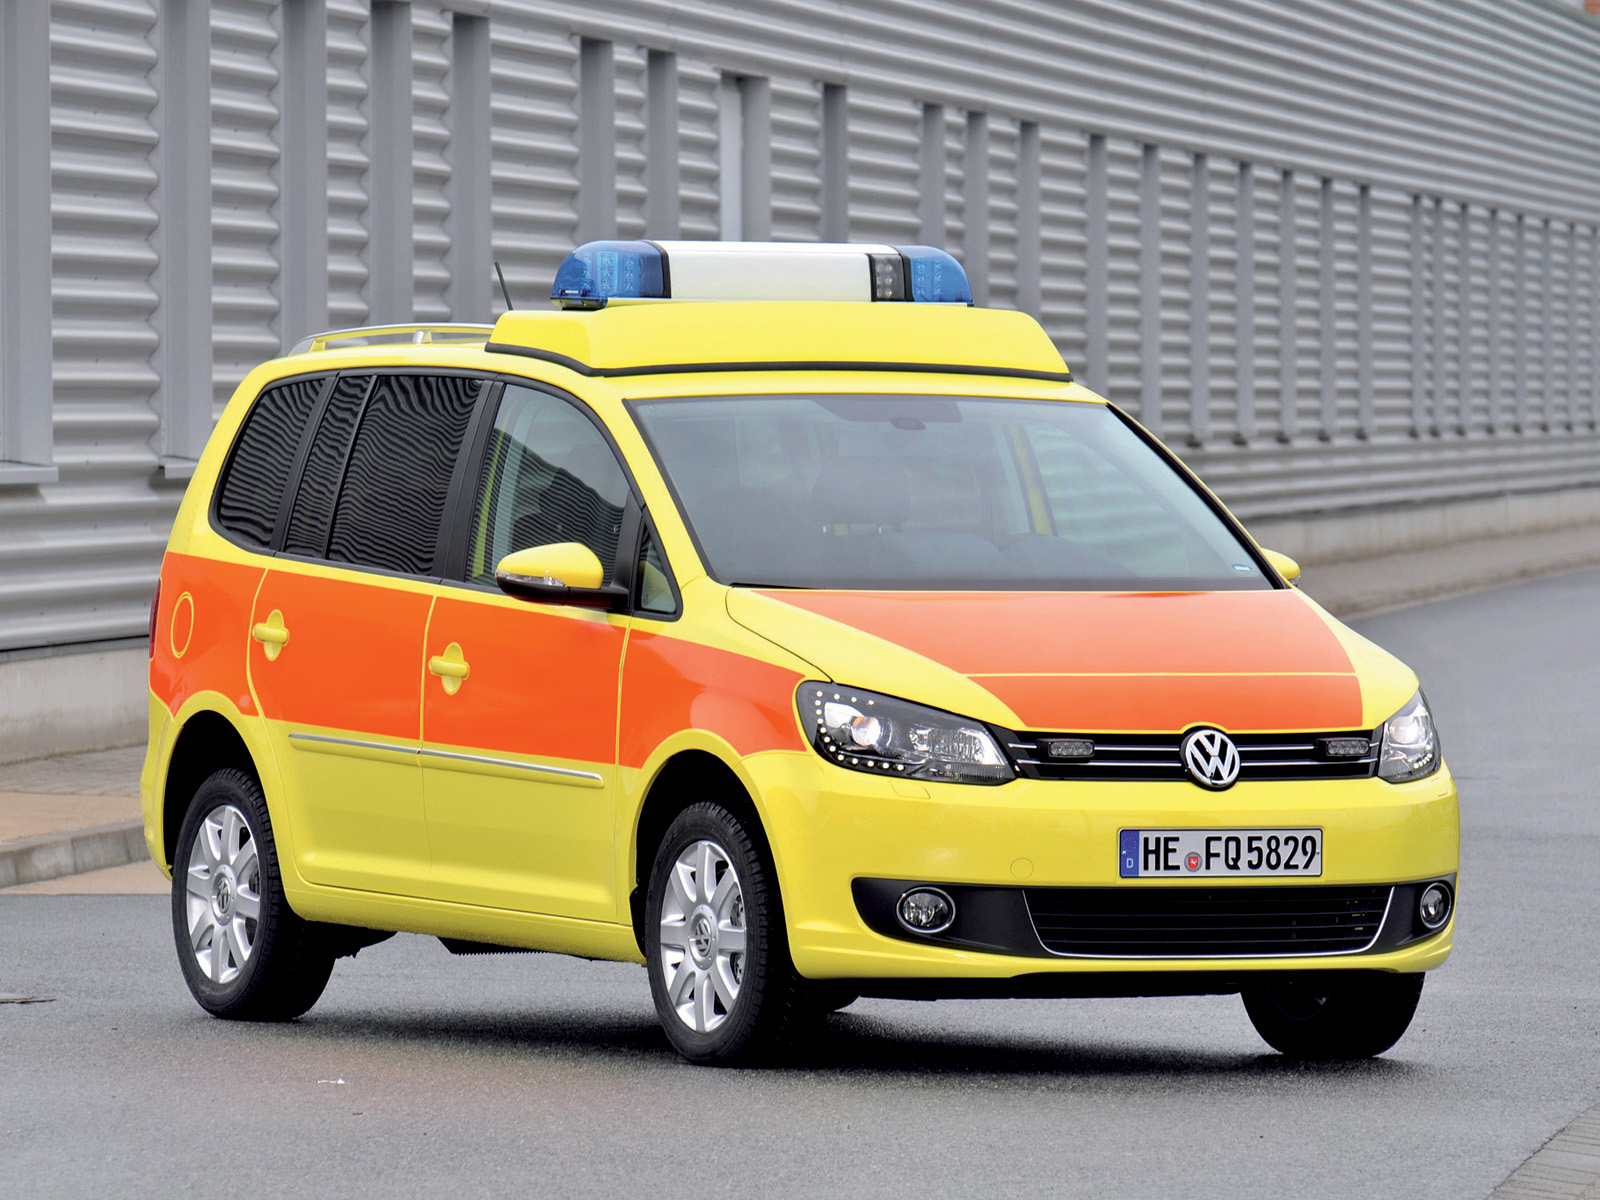 2010, Volkswagen, Touran, Notarzt, Ambulance, Emergency Wallpaper